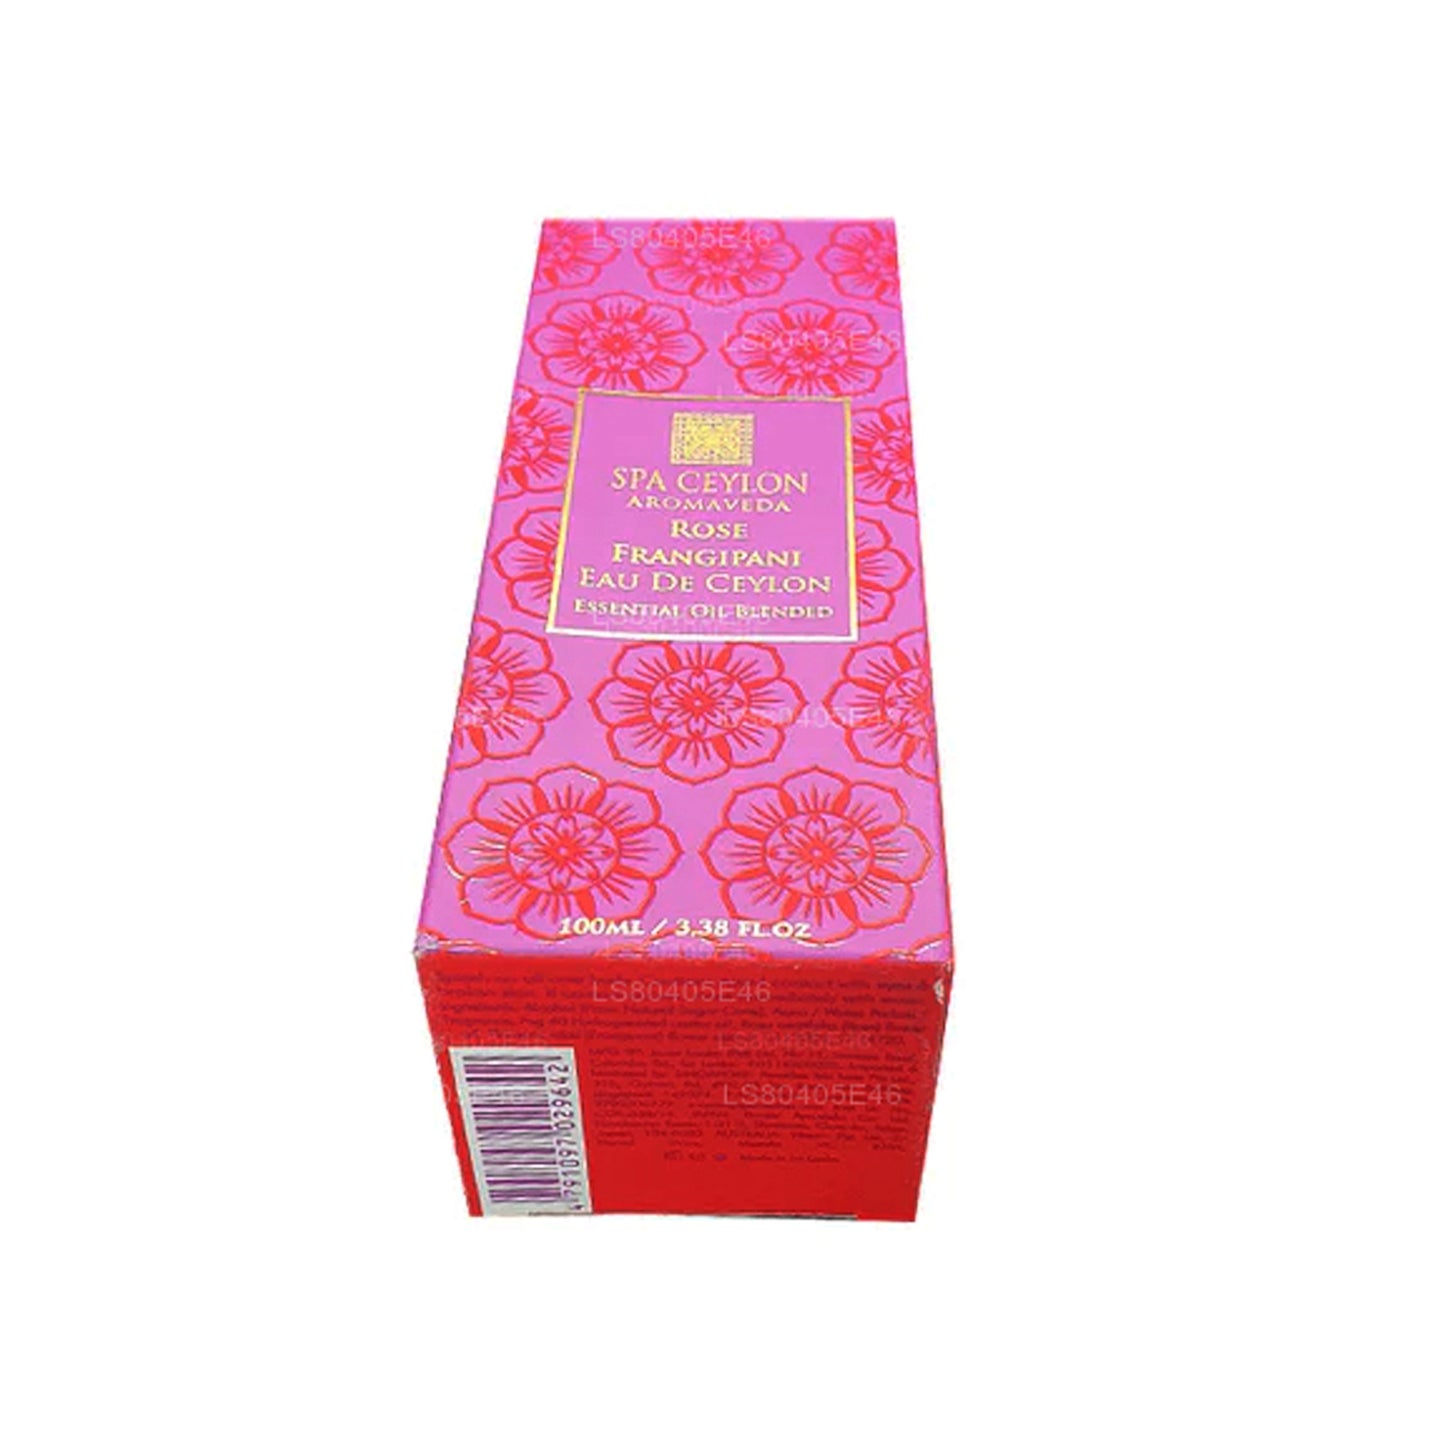 Spa Ceylon Rose Frangipani Eau de Ceylon (100 ml)